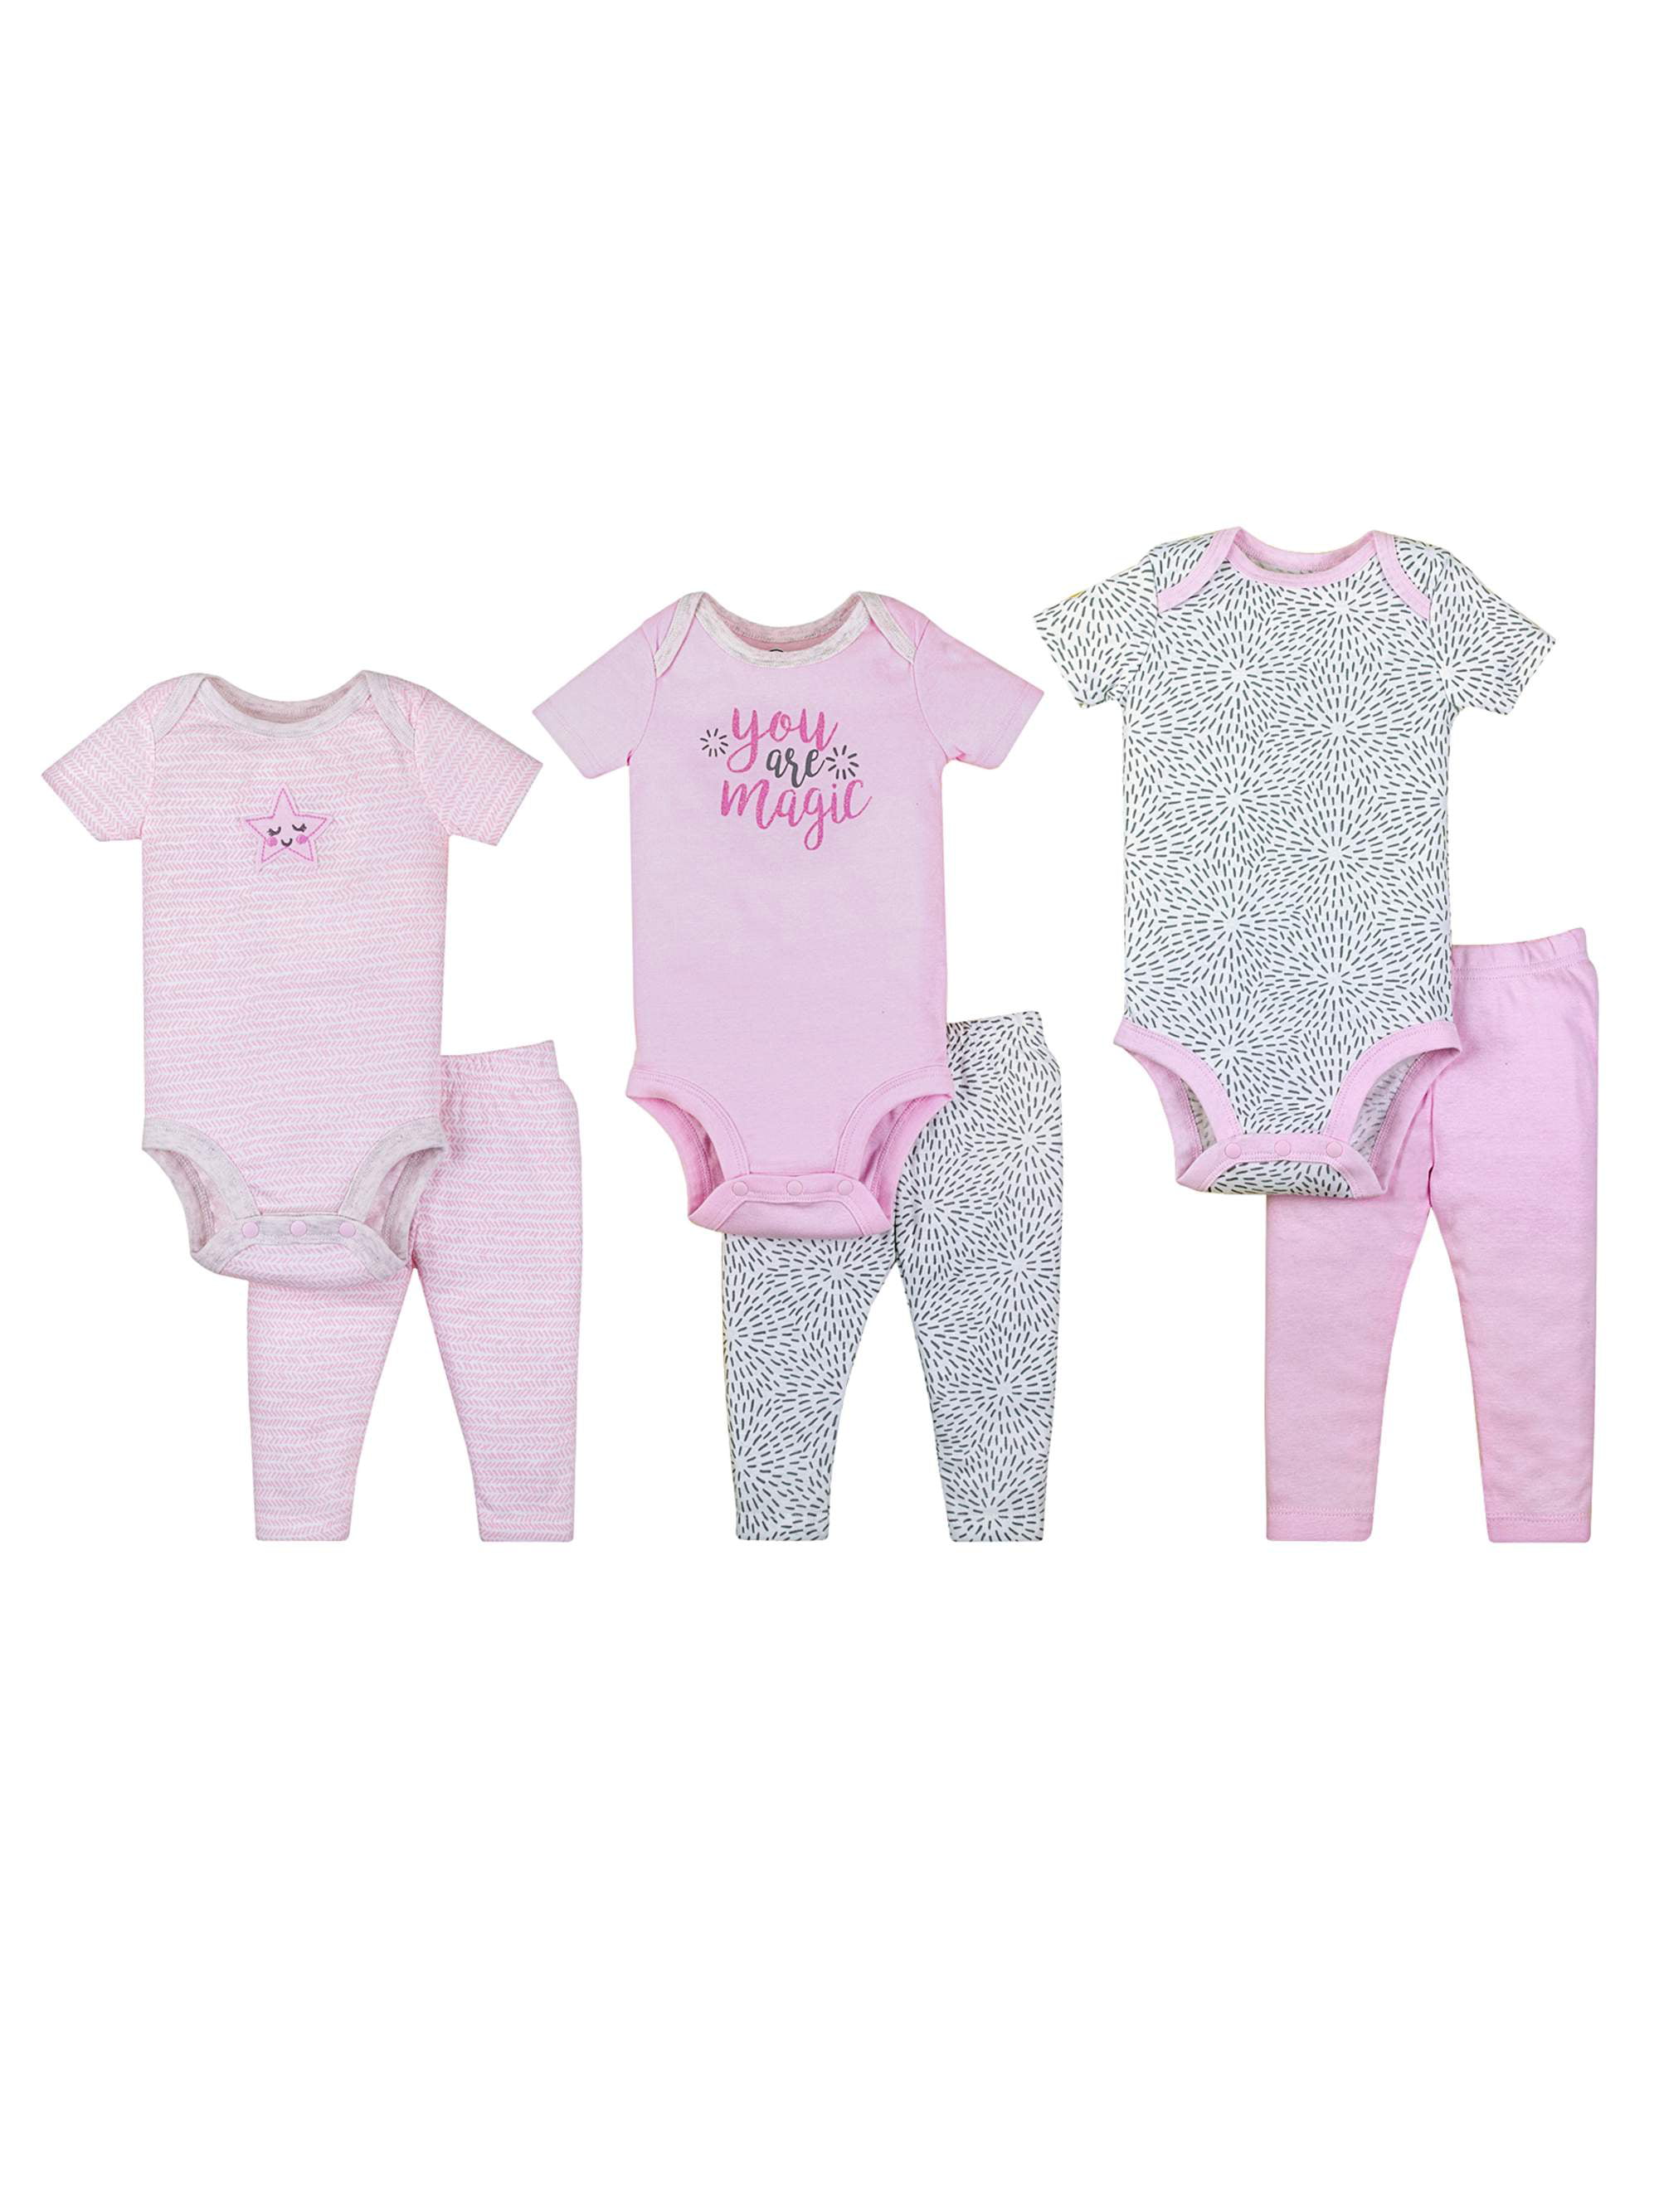 Lamaze Organic Baby Organic Baby//Toddler Girl Boy Gift Sets Unisex Outfits